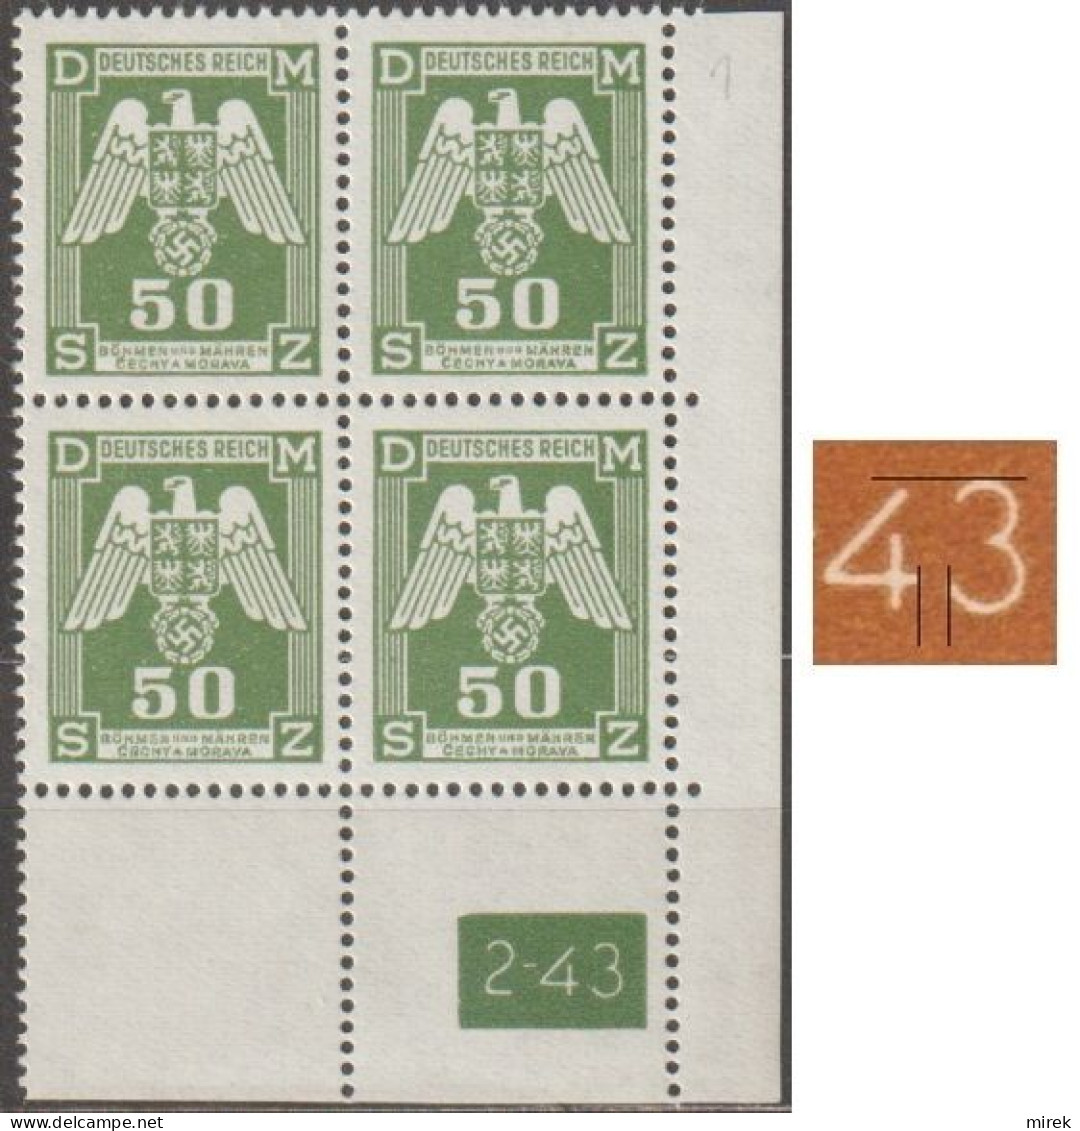 052/ Pof. SL 15, Corner Stamps, Plate Number 2-43, Type 2, Var. 1 - Ungebraucht